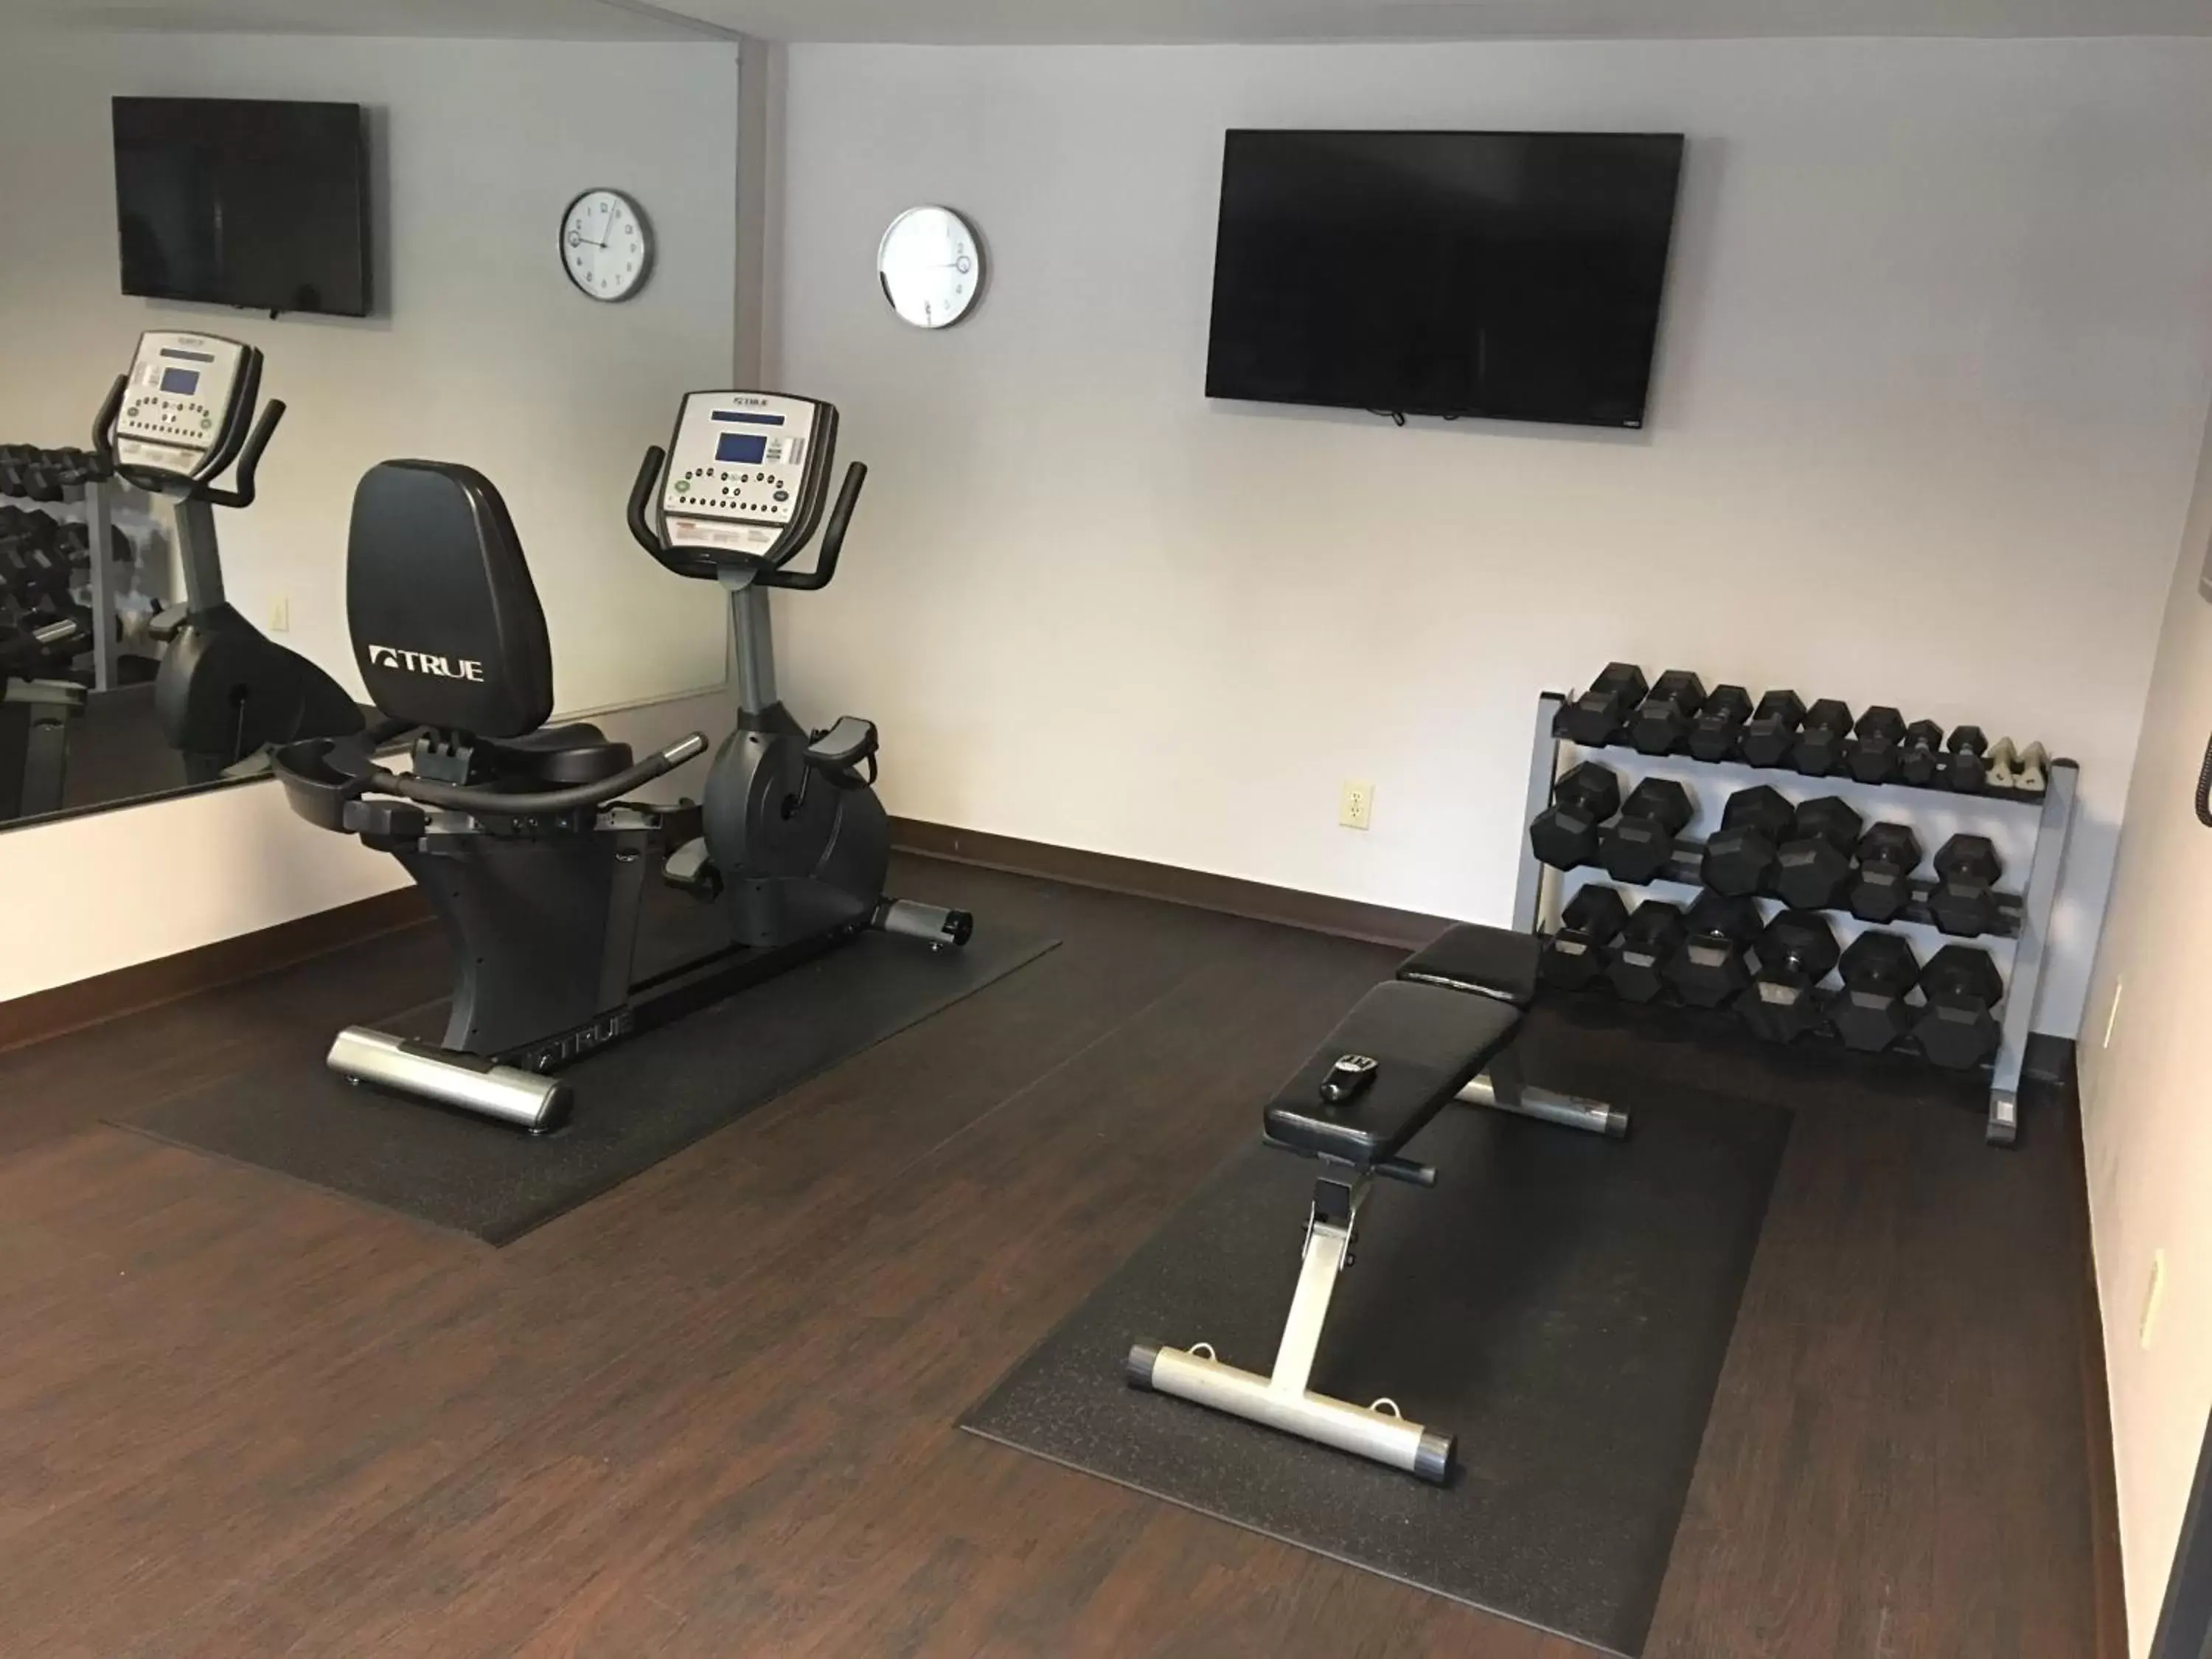 Fitness centre/facilities, Fitness Center/Facilities in Country Inn & Suites by Radisson, Alpharetta, GA